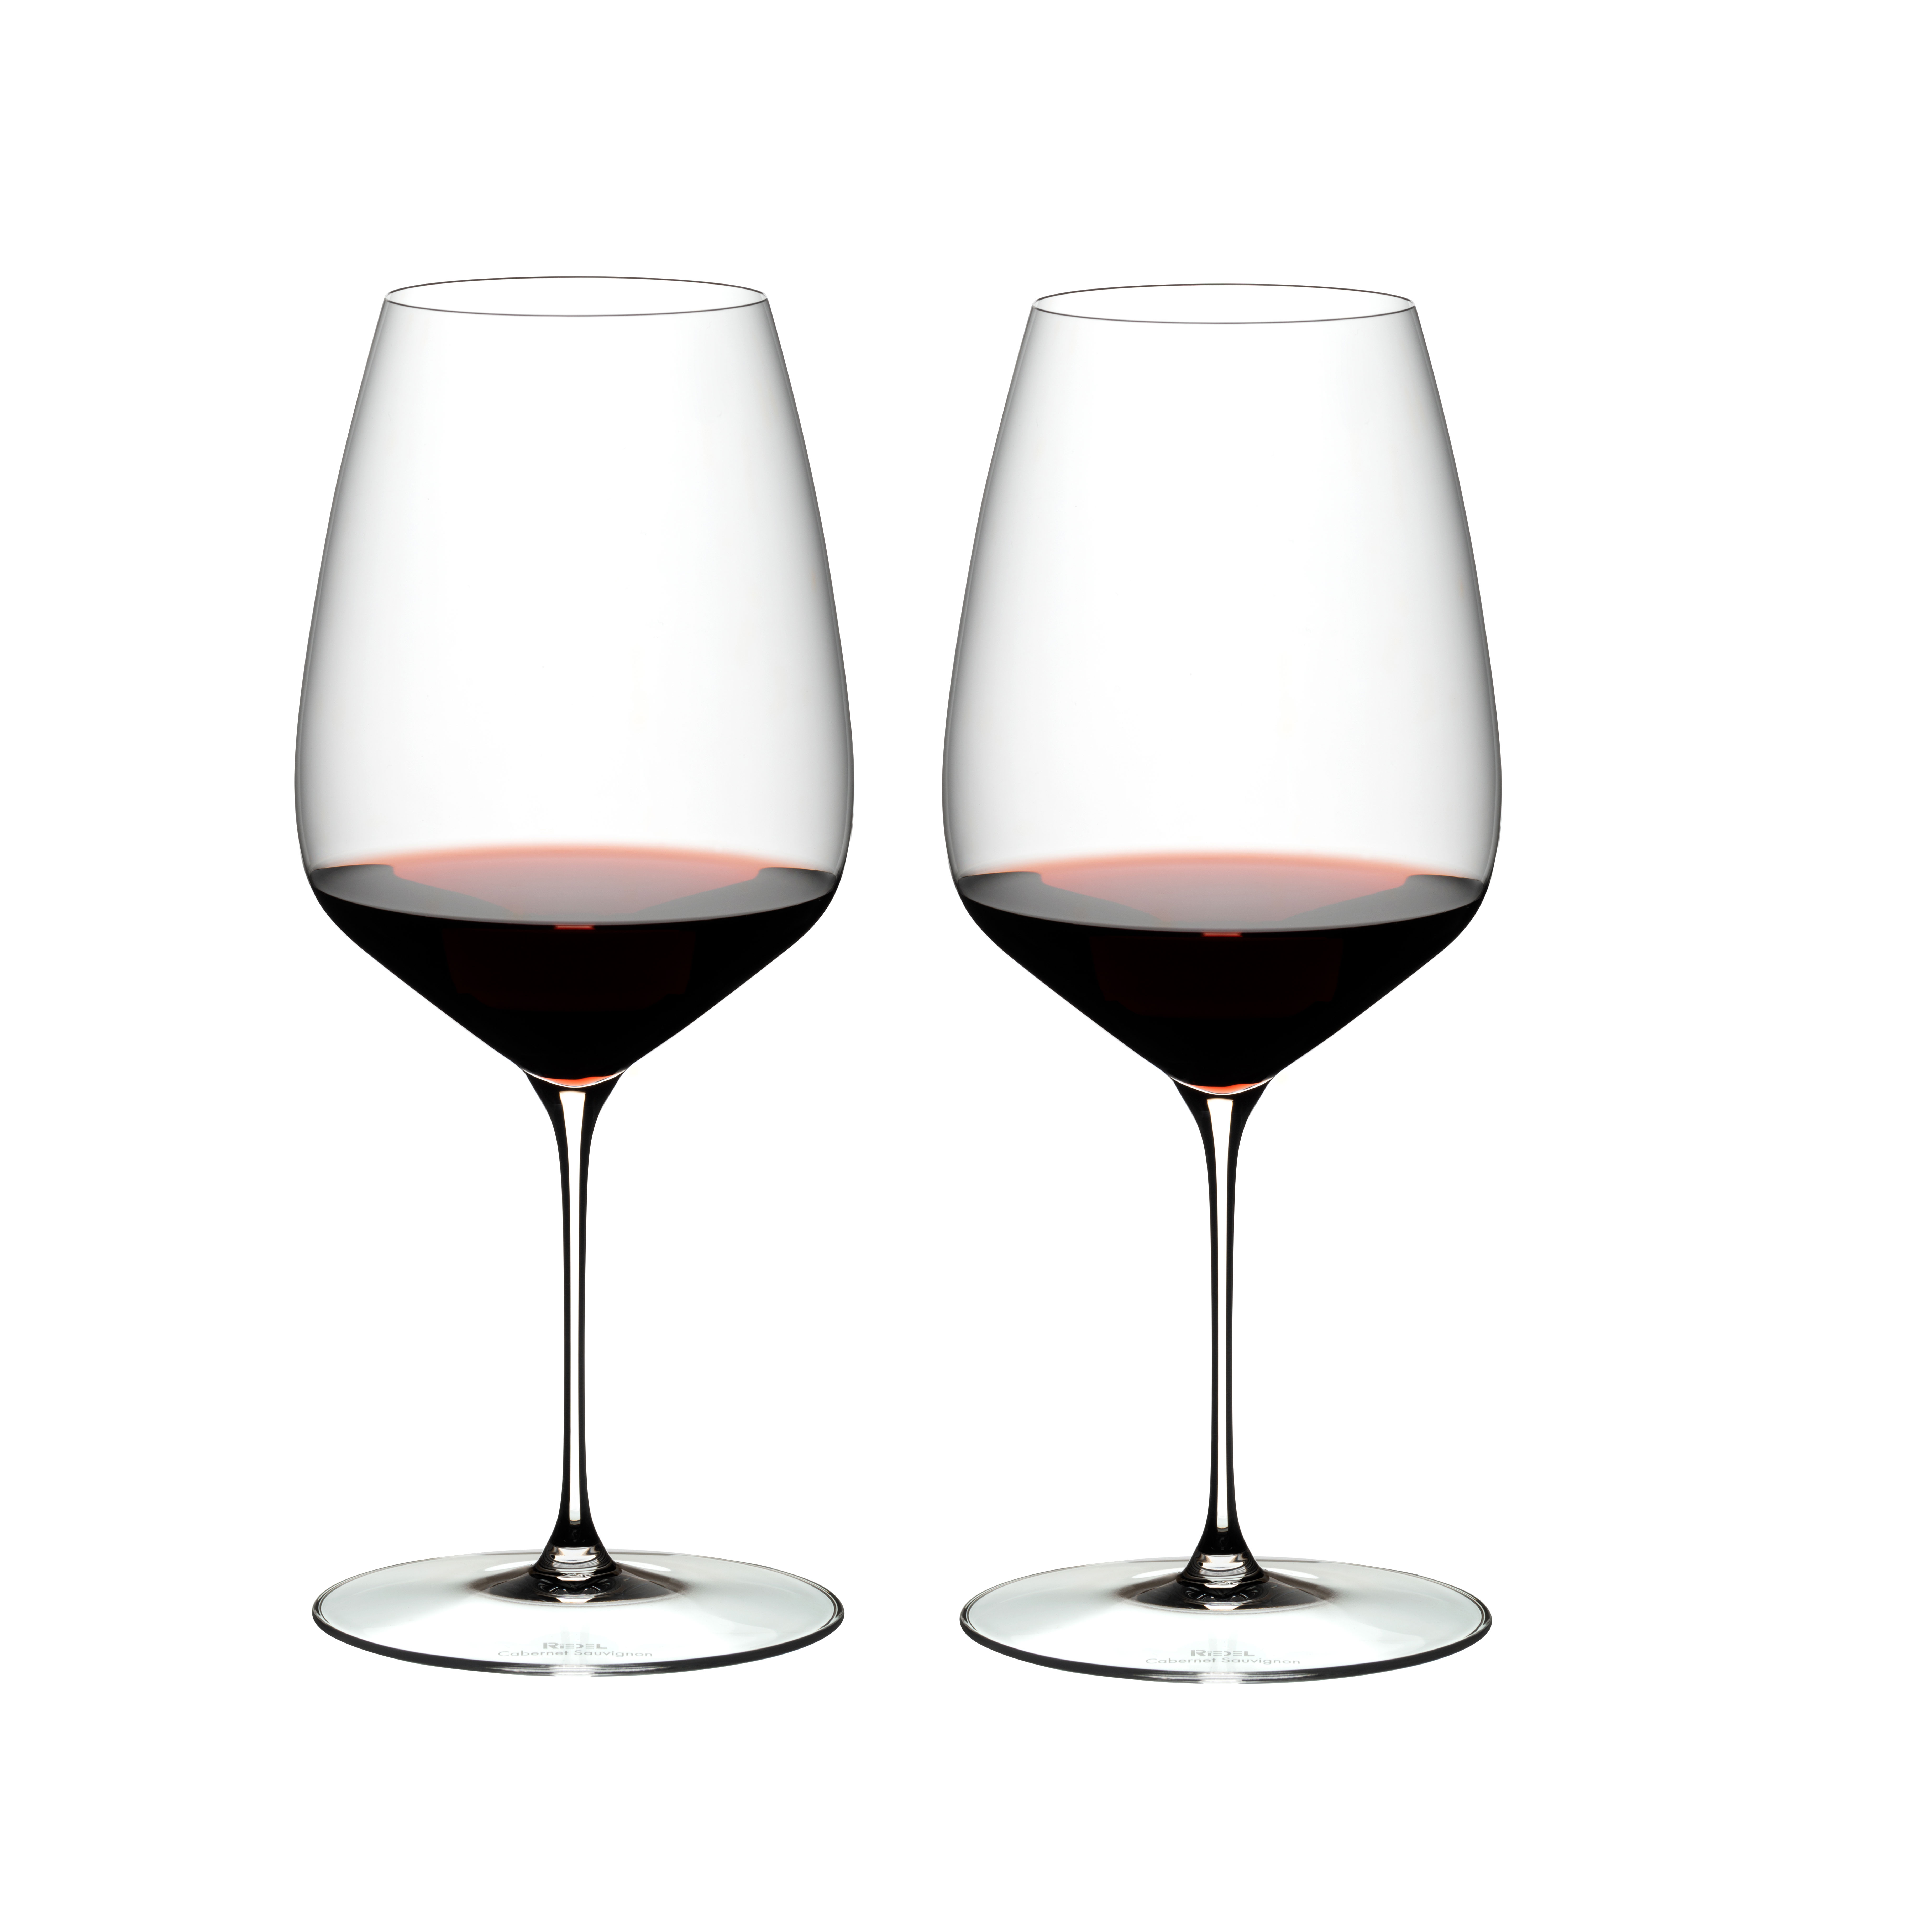 Riedel Veloce Cabernet Merlot Wine Glasses, Pair